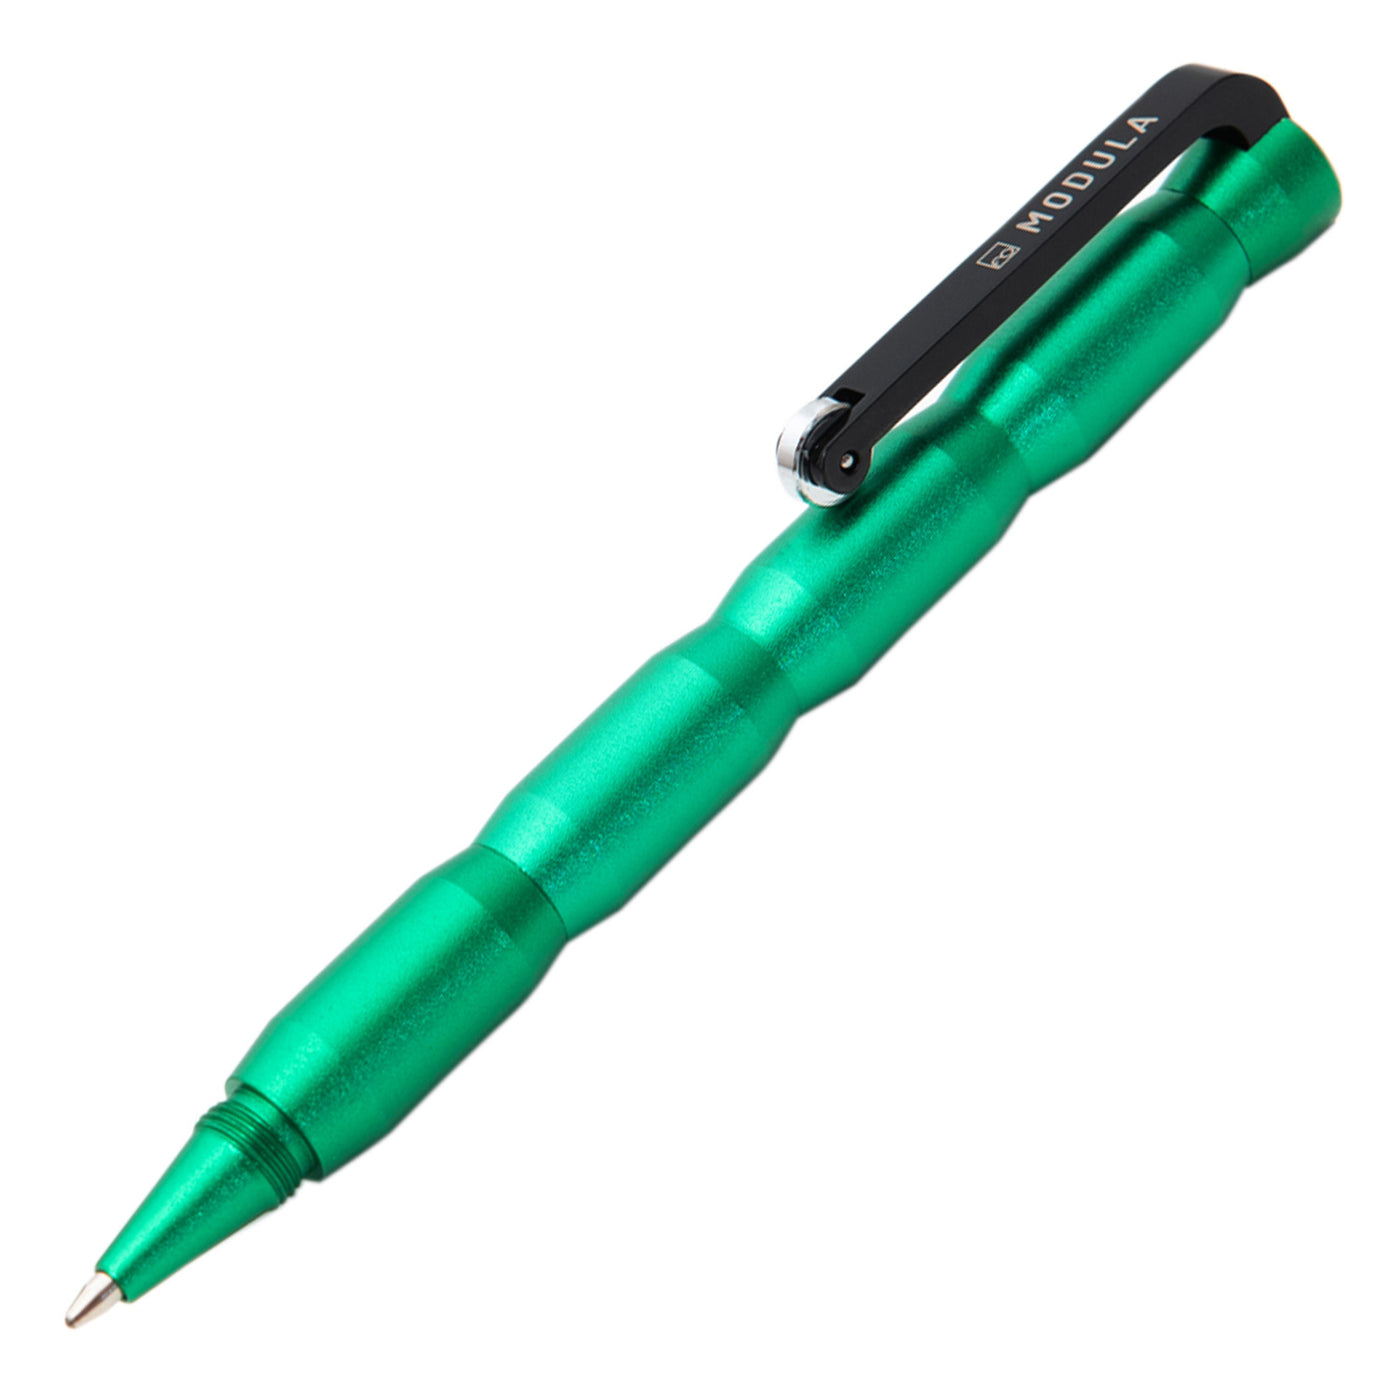 Pininfarina Segno Forever Modula Multifunction Pen - Green 2